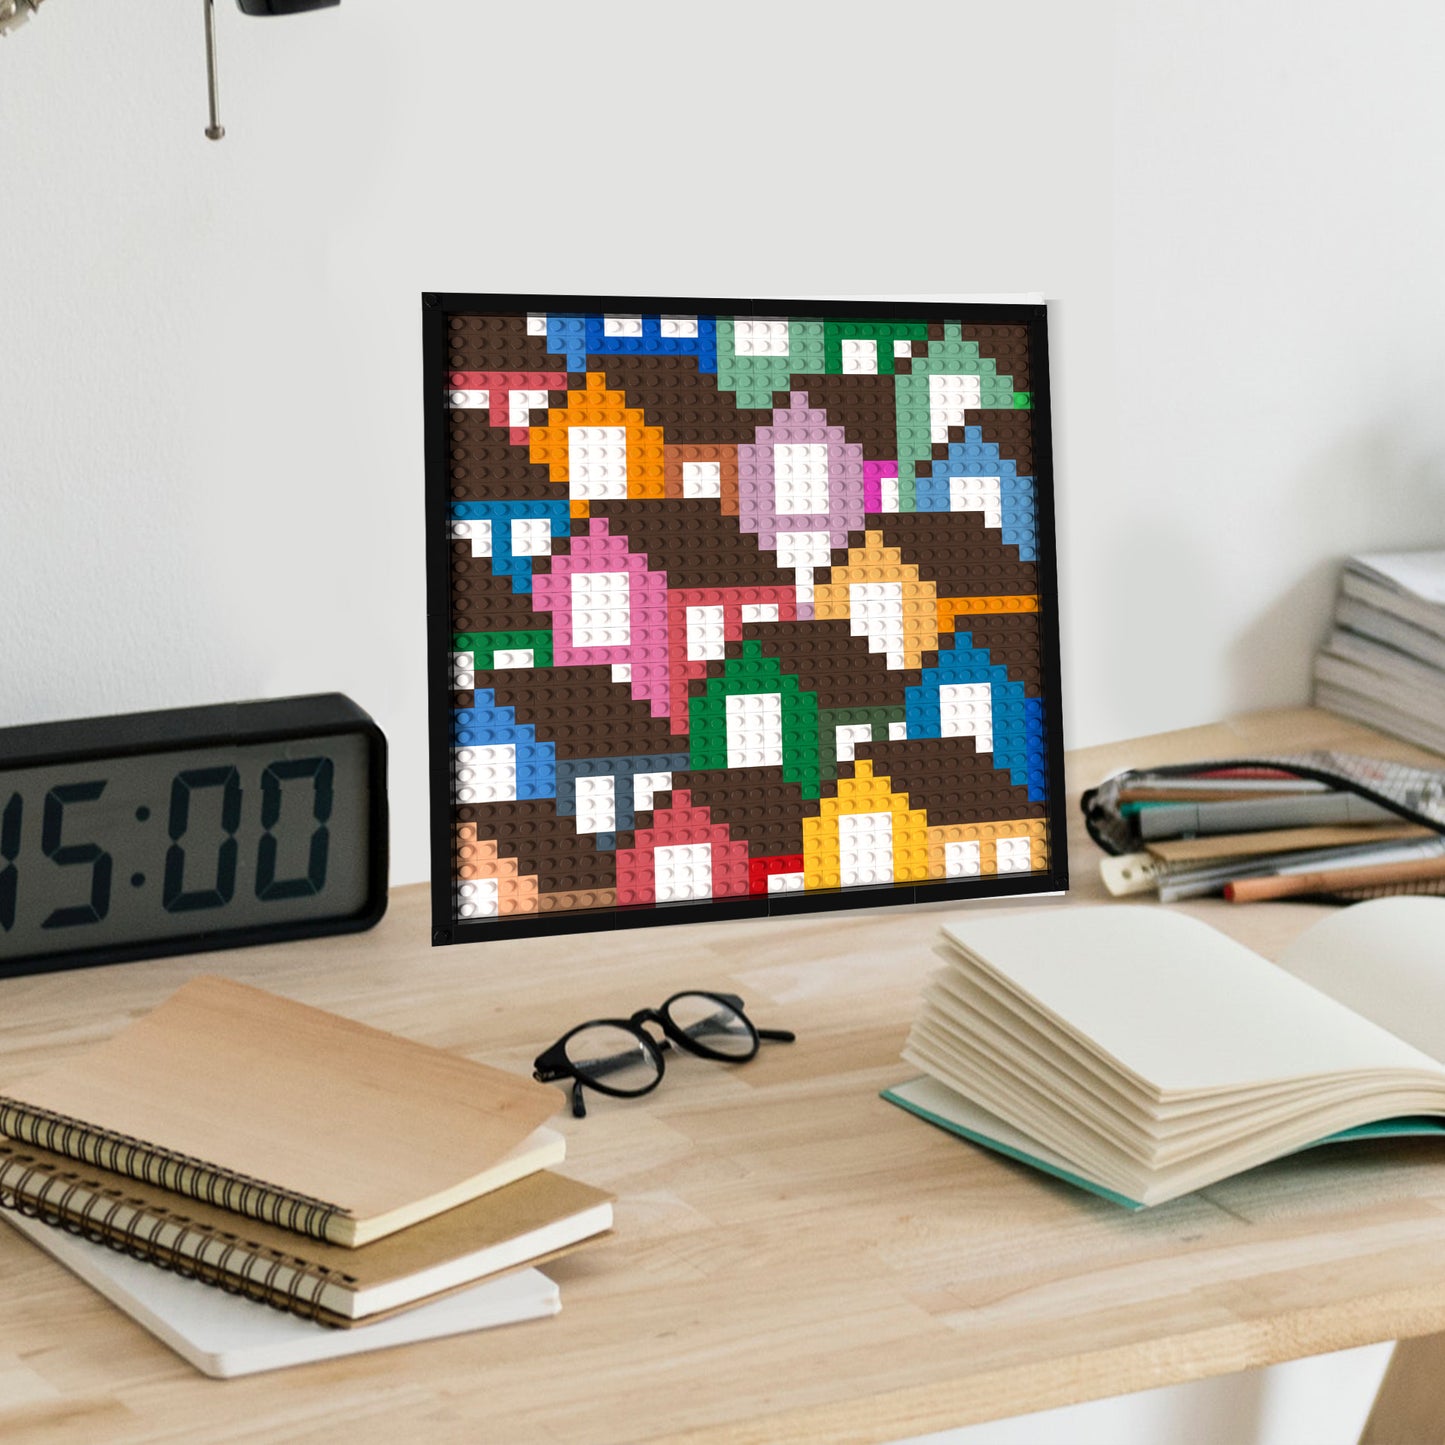 32*32 Compatible Lego Pieces Geometric Pattern House Group Pixel Art